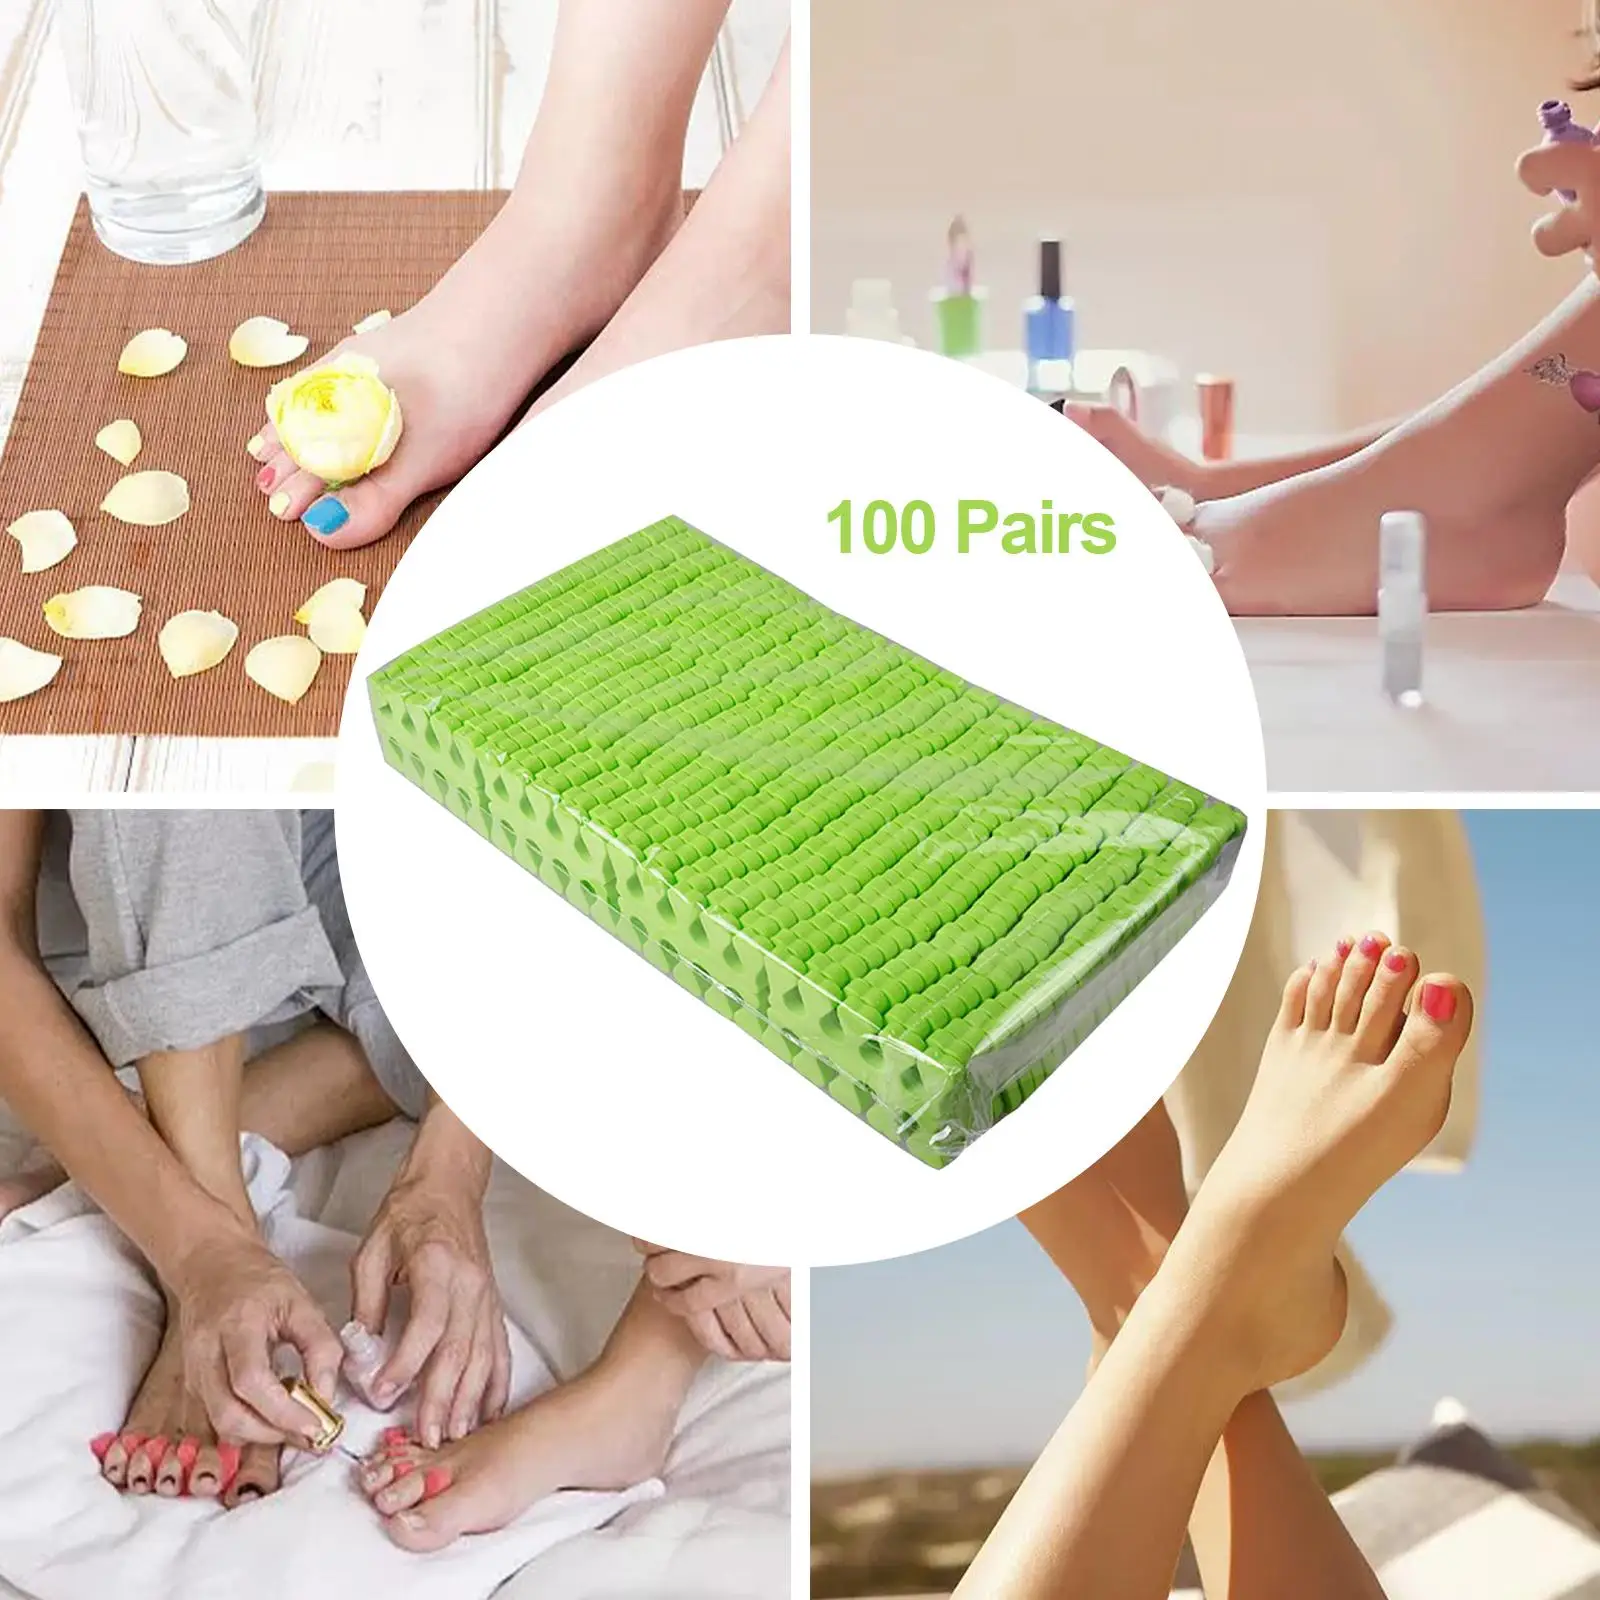 Nail Art Toe Separator Soft Sponge Practical for Manicure Home Use 200Pcs